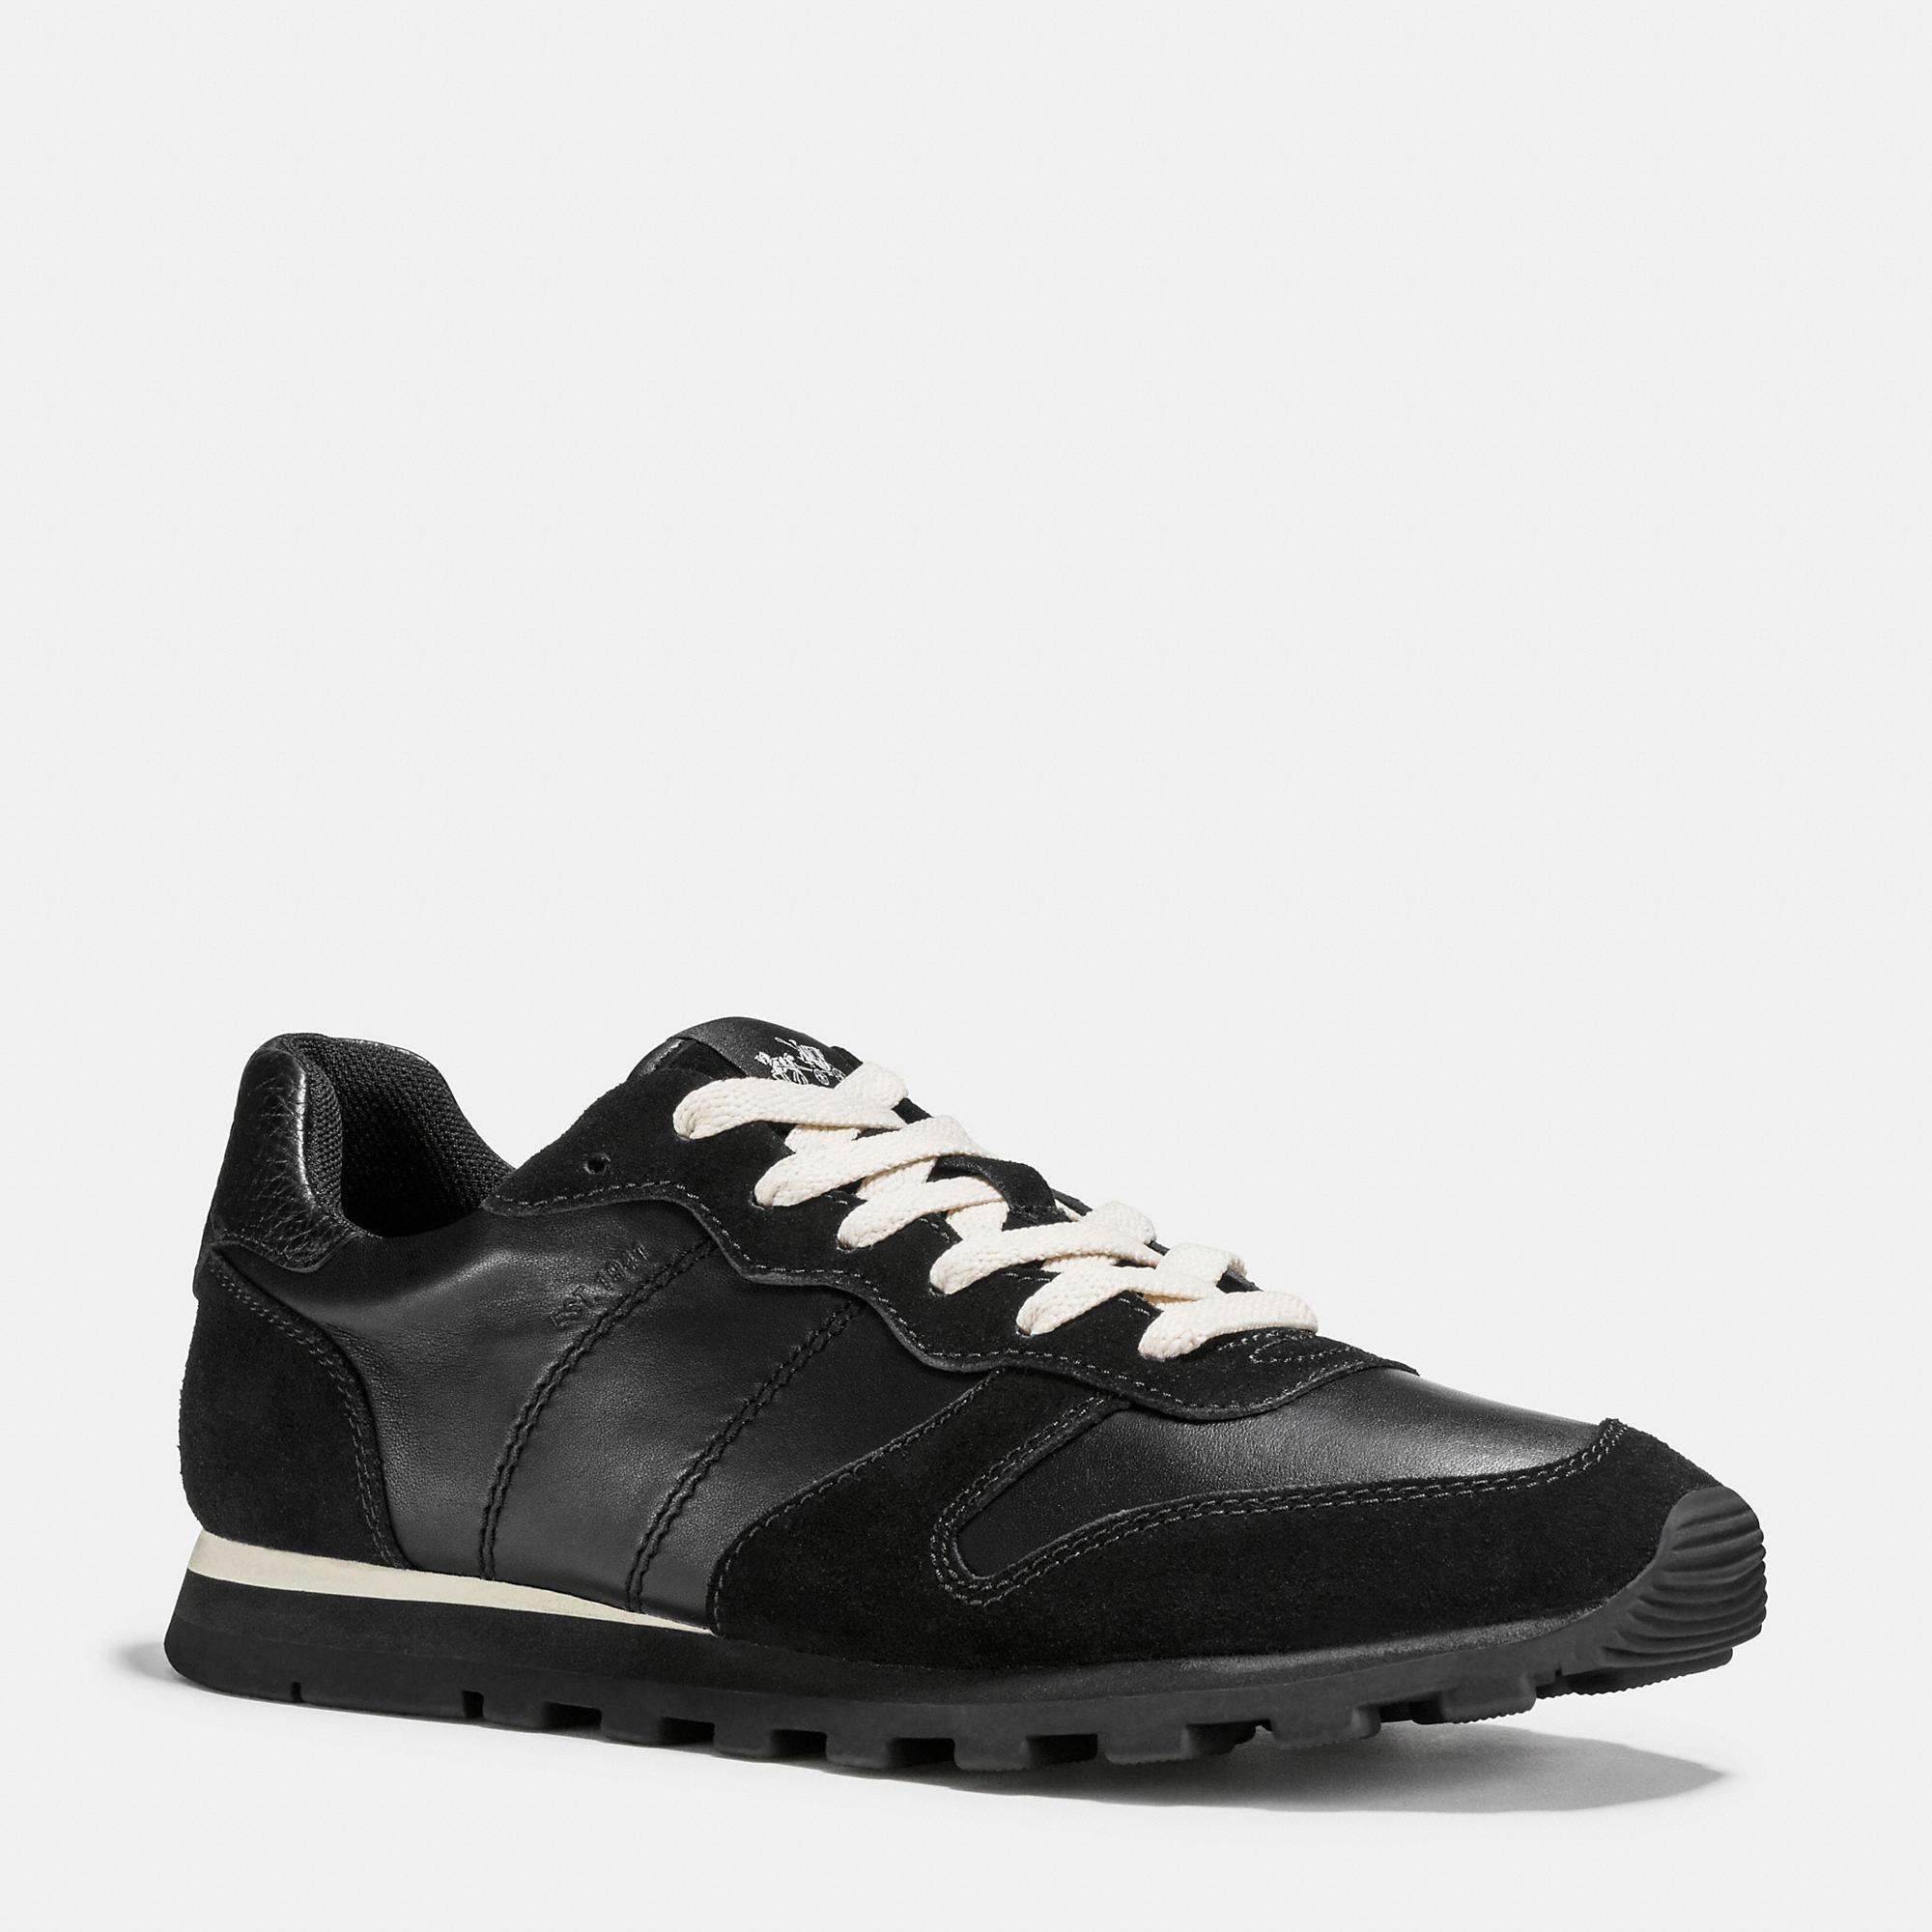 Lyst - Coach C118 Sneaker in Black for Men - Save 51%